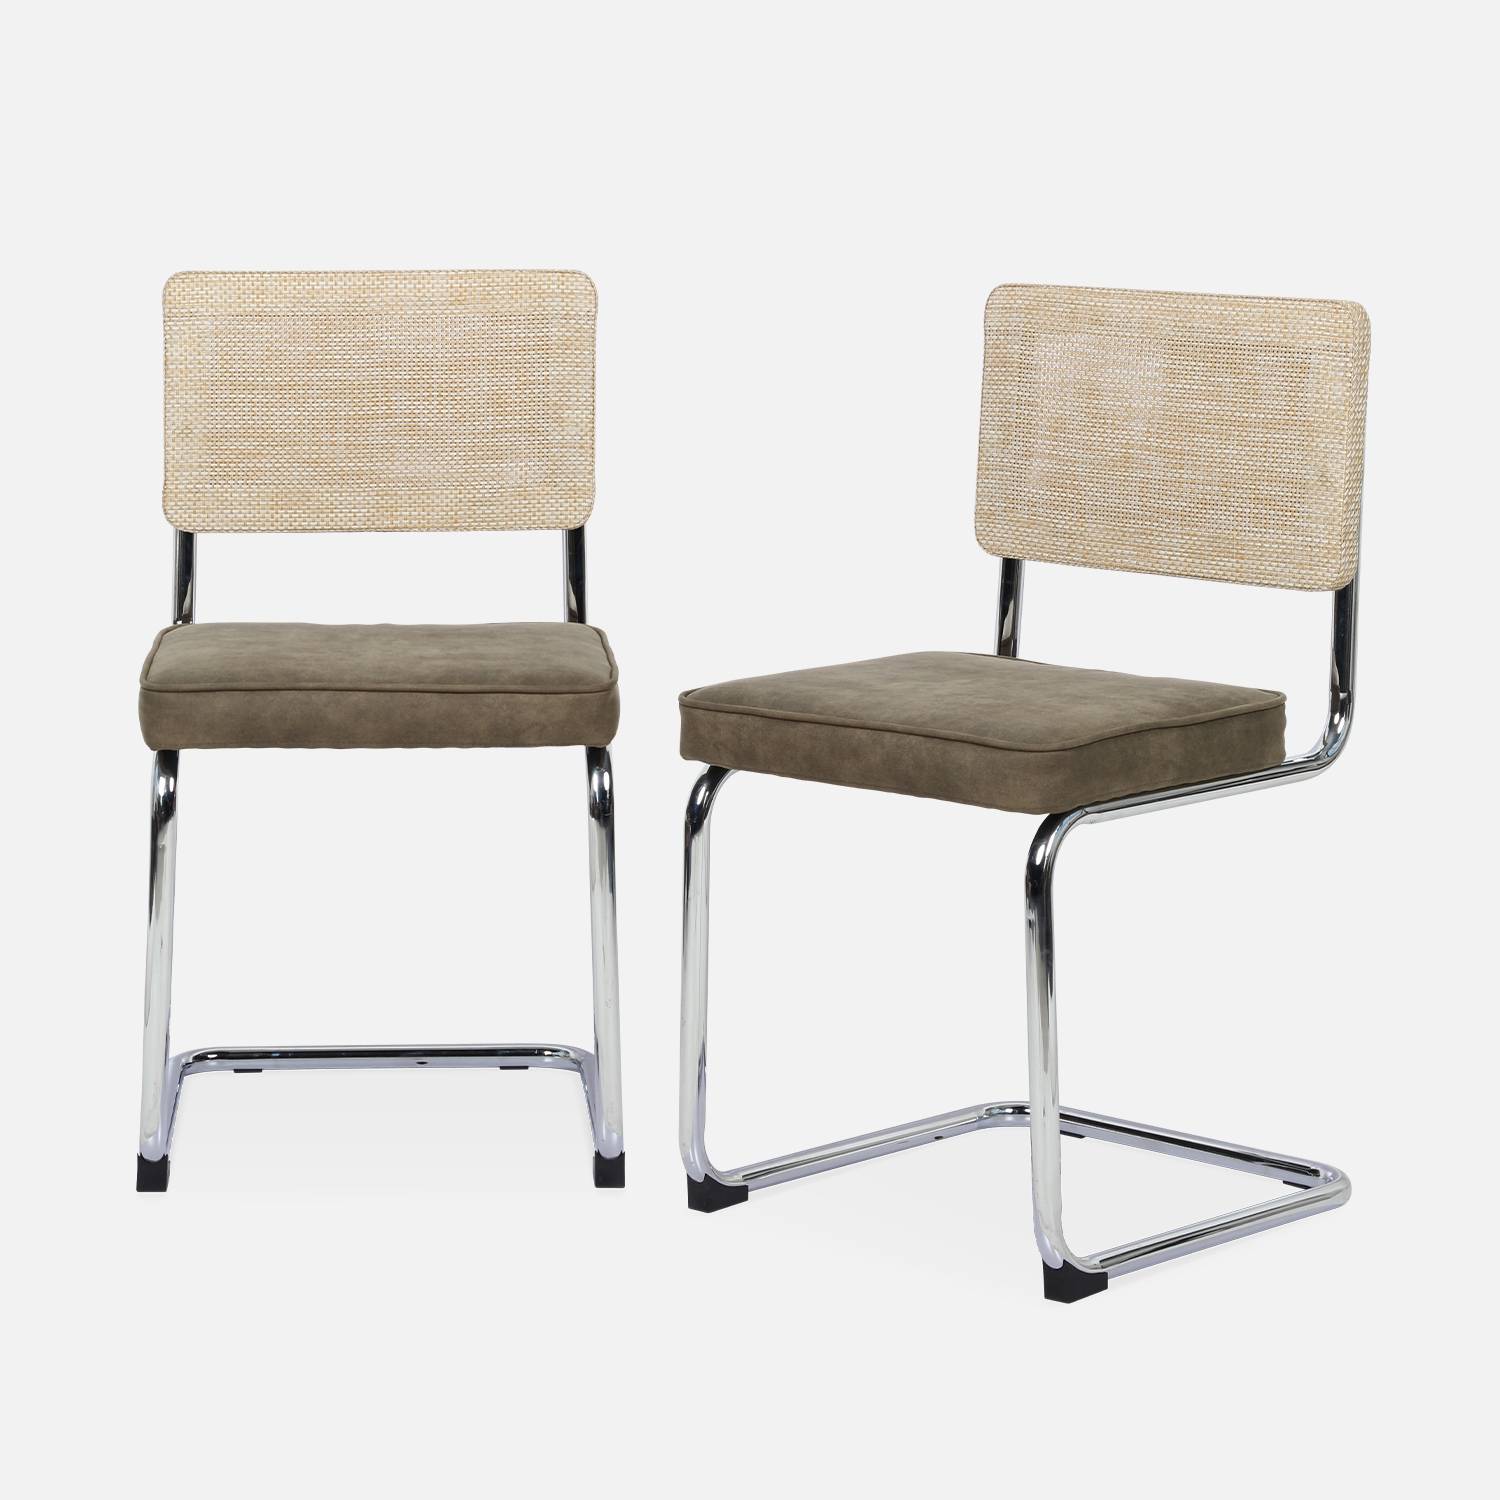 2 chaises cantilever - Maja - tissu kaki et résine effet rotin, 46 x 54,5 x 84,5cm   Photo4